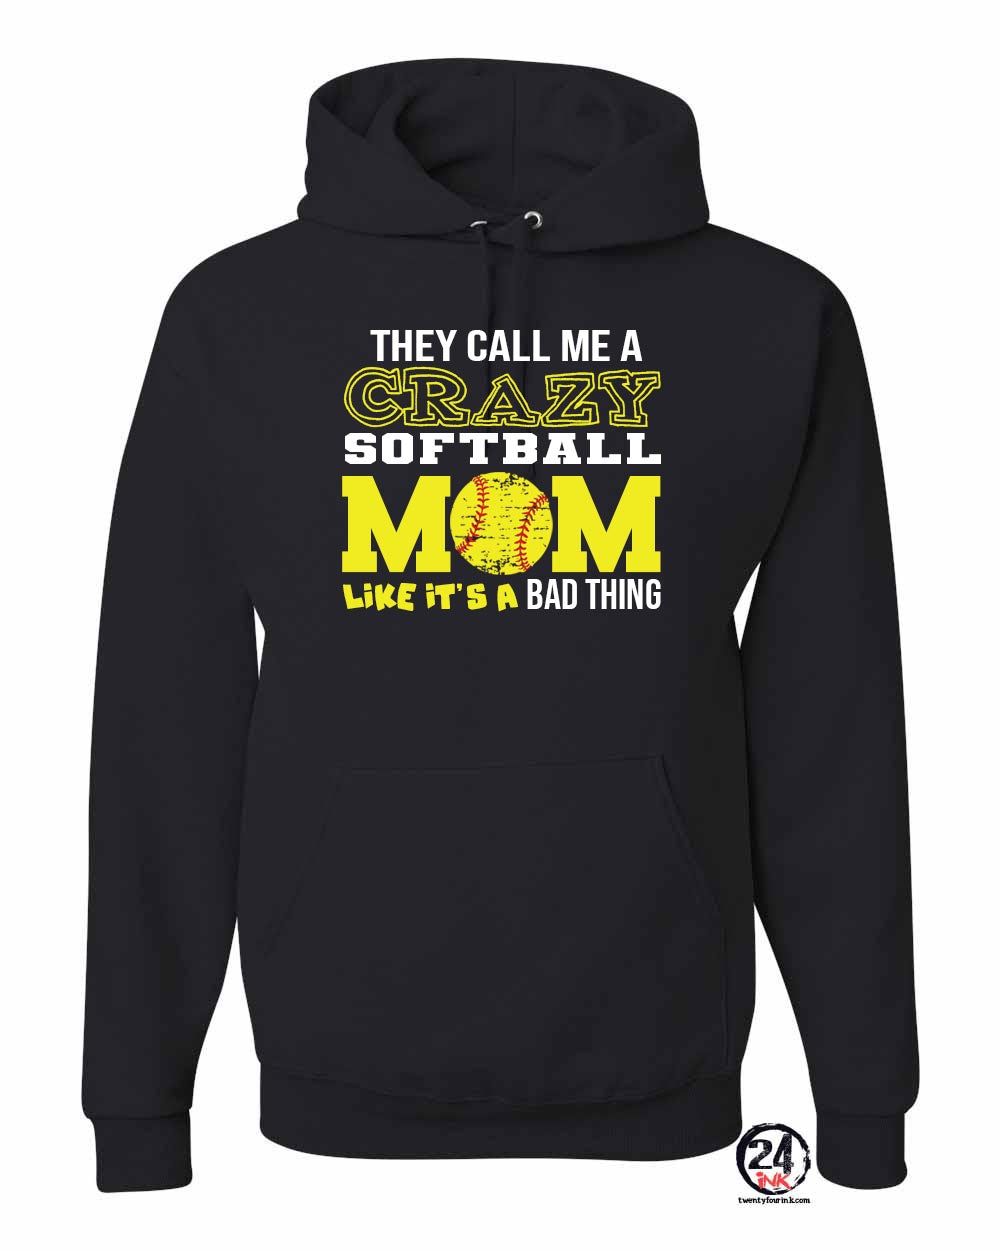 Crazy softball mom Hooded Sweatshirt